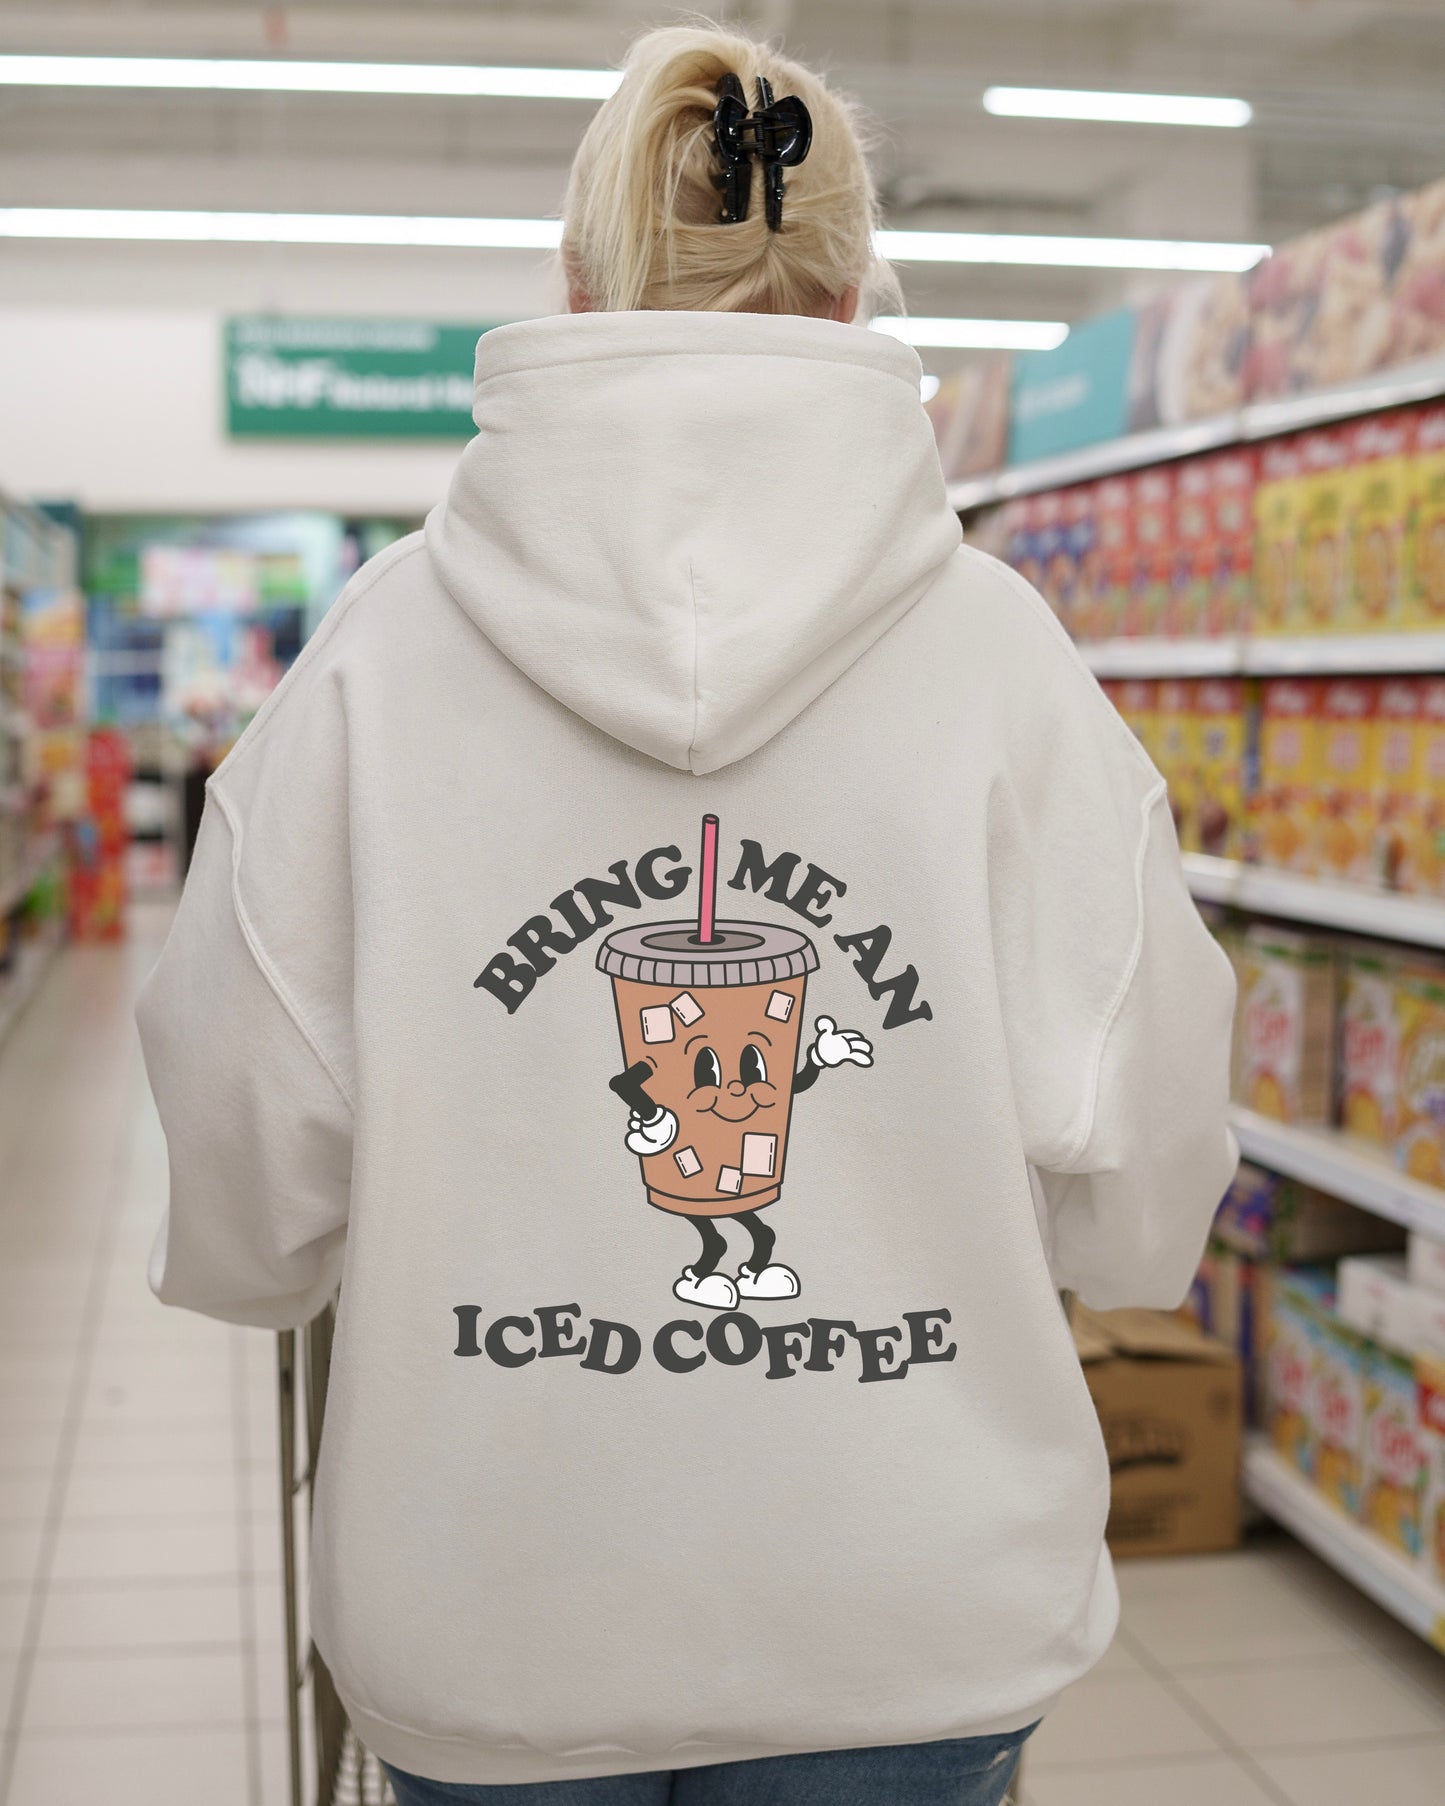 Bring Me An Iced Coffee Hooded Sweatshirt